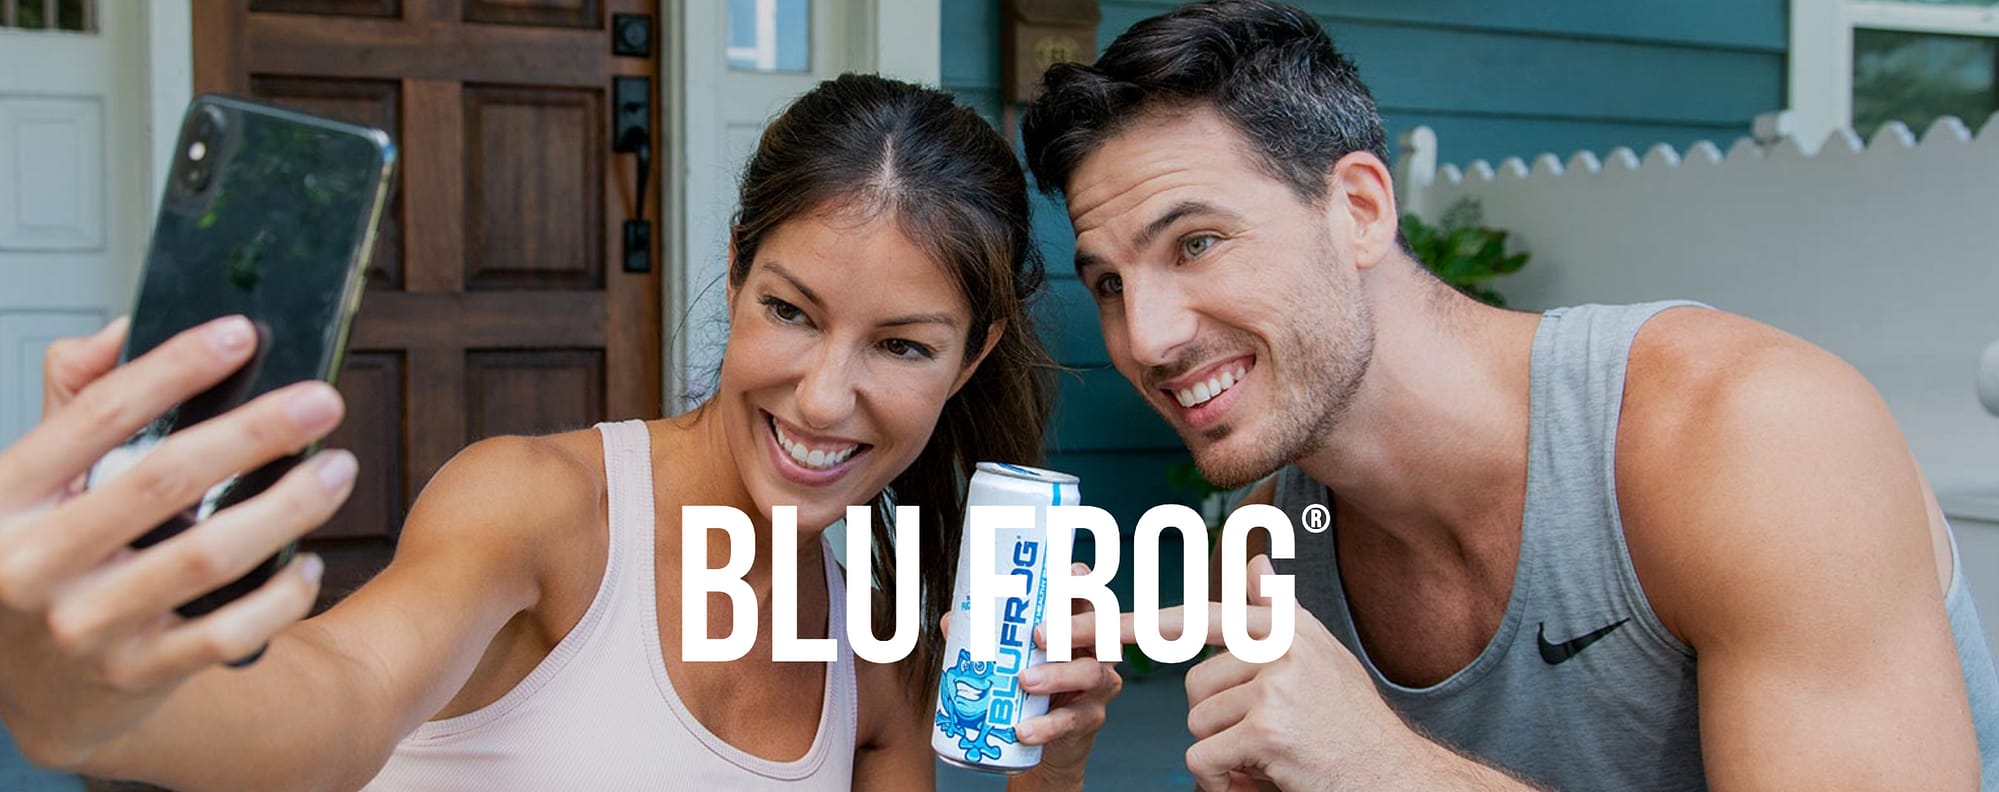 Limu Blu Frog front image